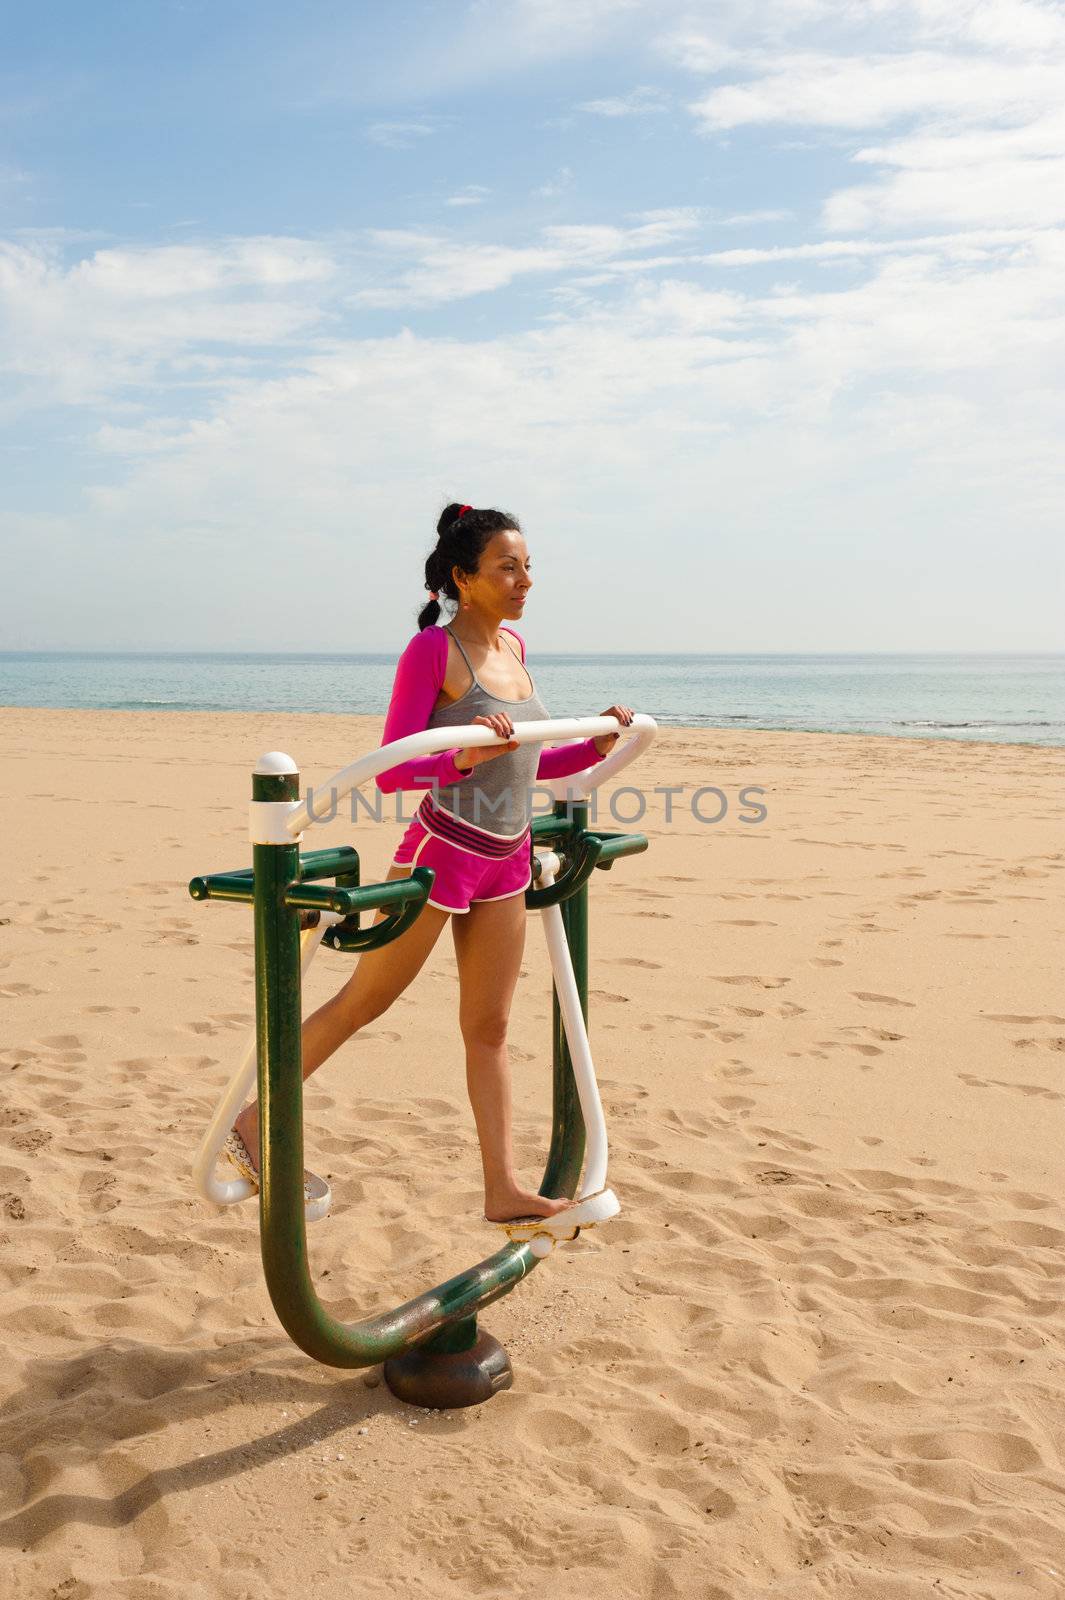 Fitness machine on beach by hemeroskopion